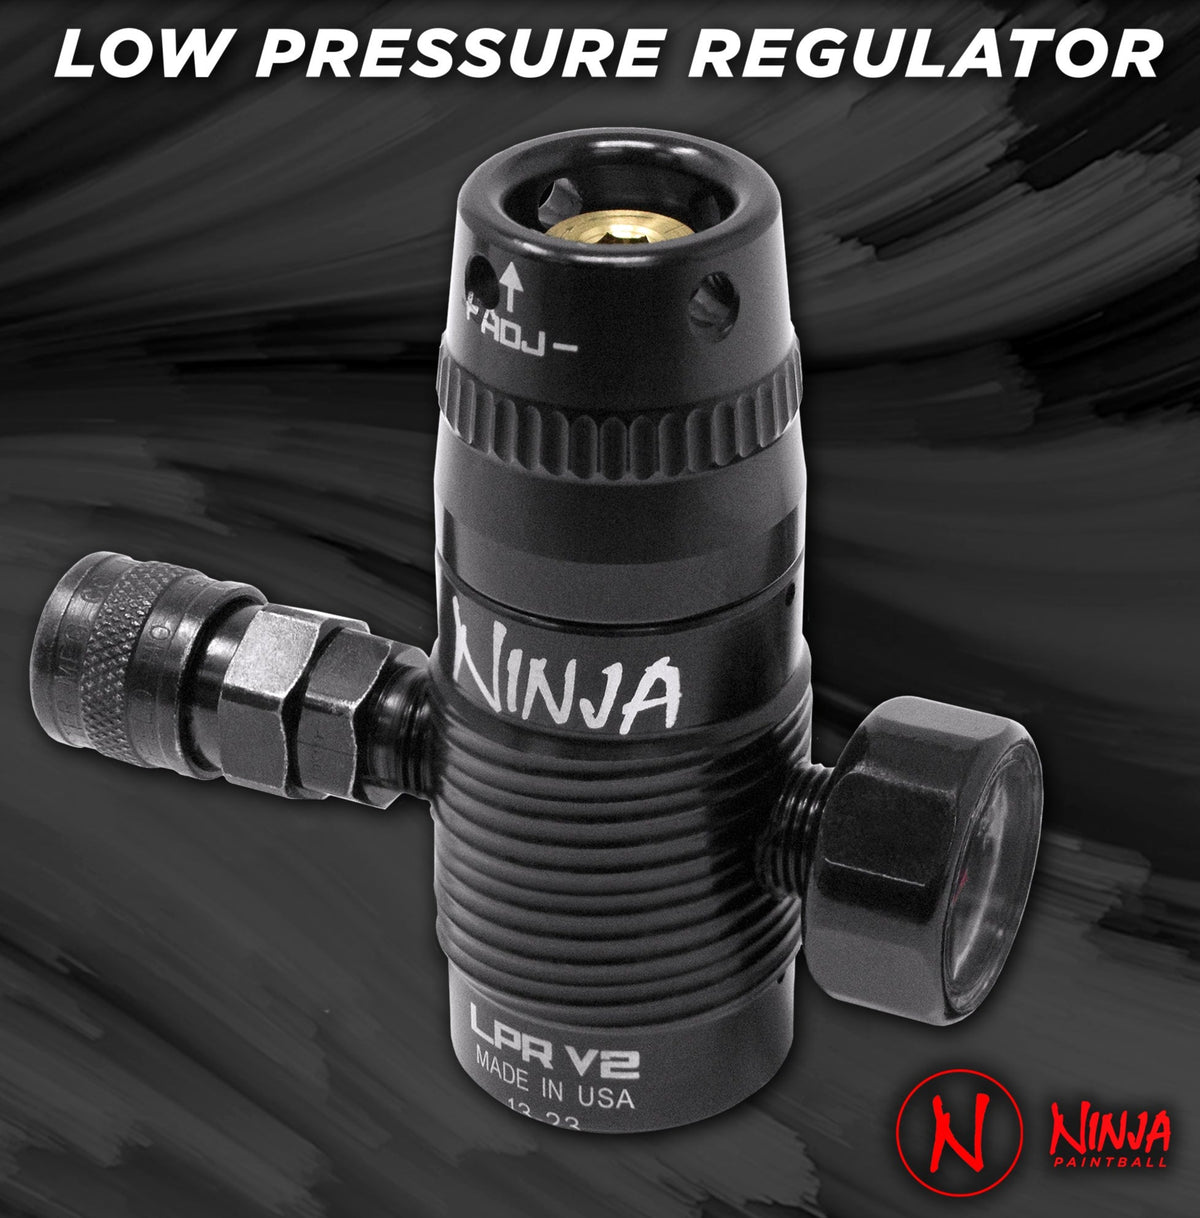 Ninja Adjustable LPR V2 For Airsoft HPA Systems (Low Pressure Regulator)